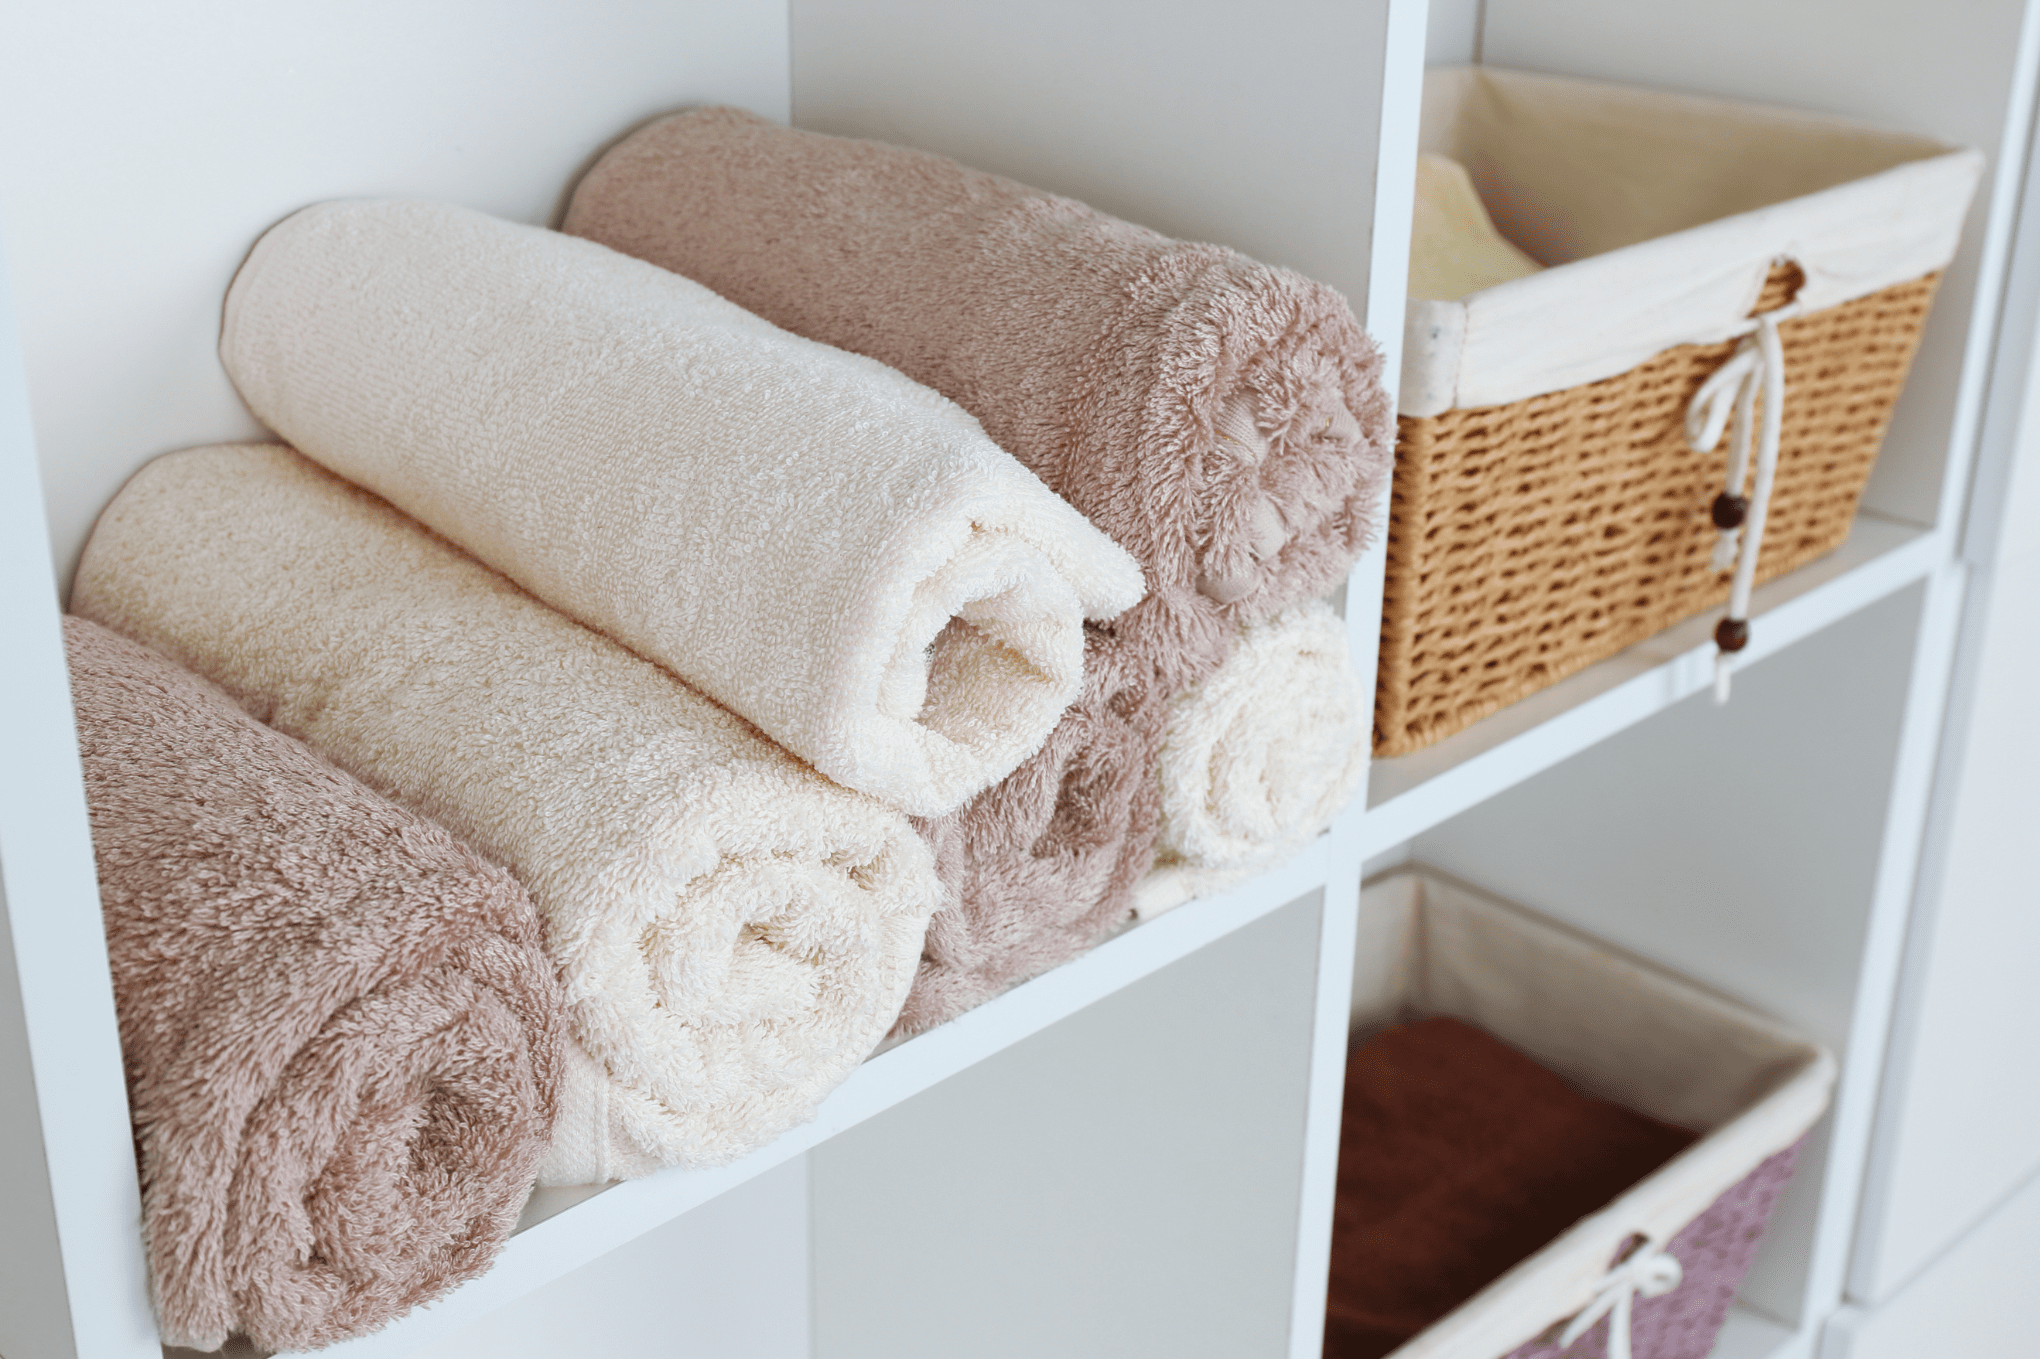 bath towels rolled on shelf in closet